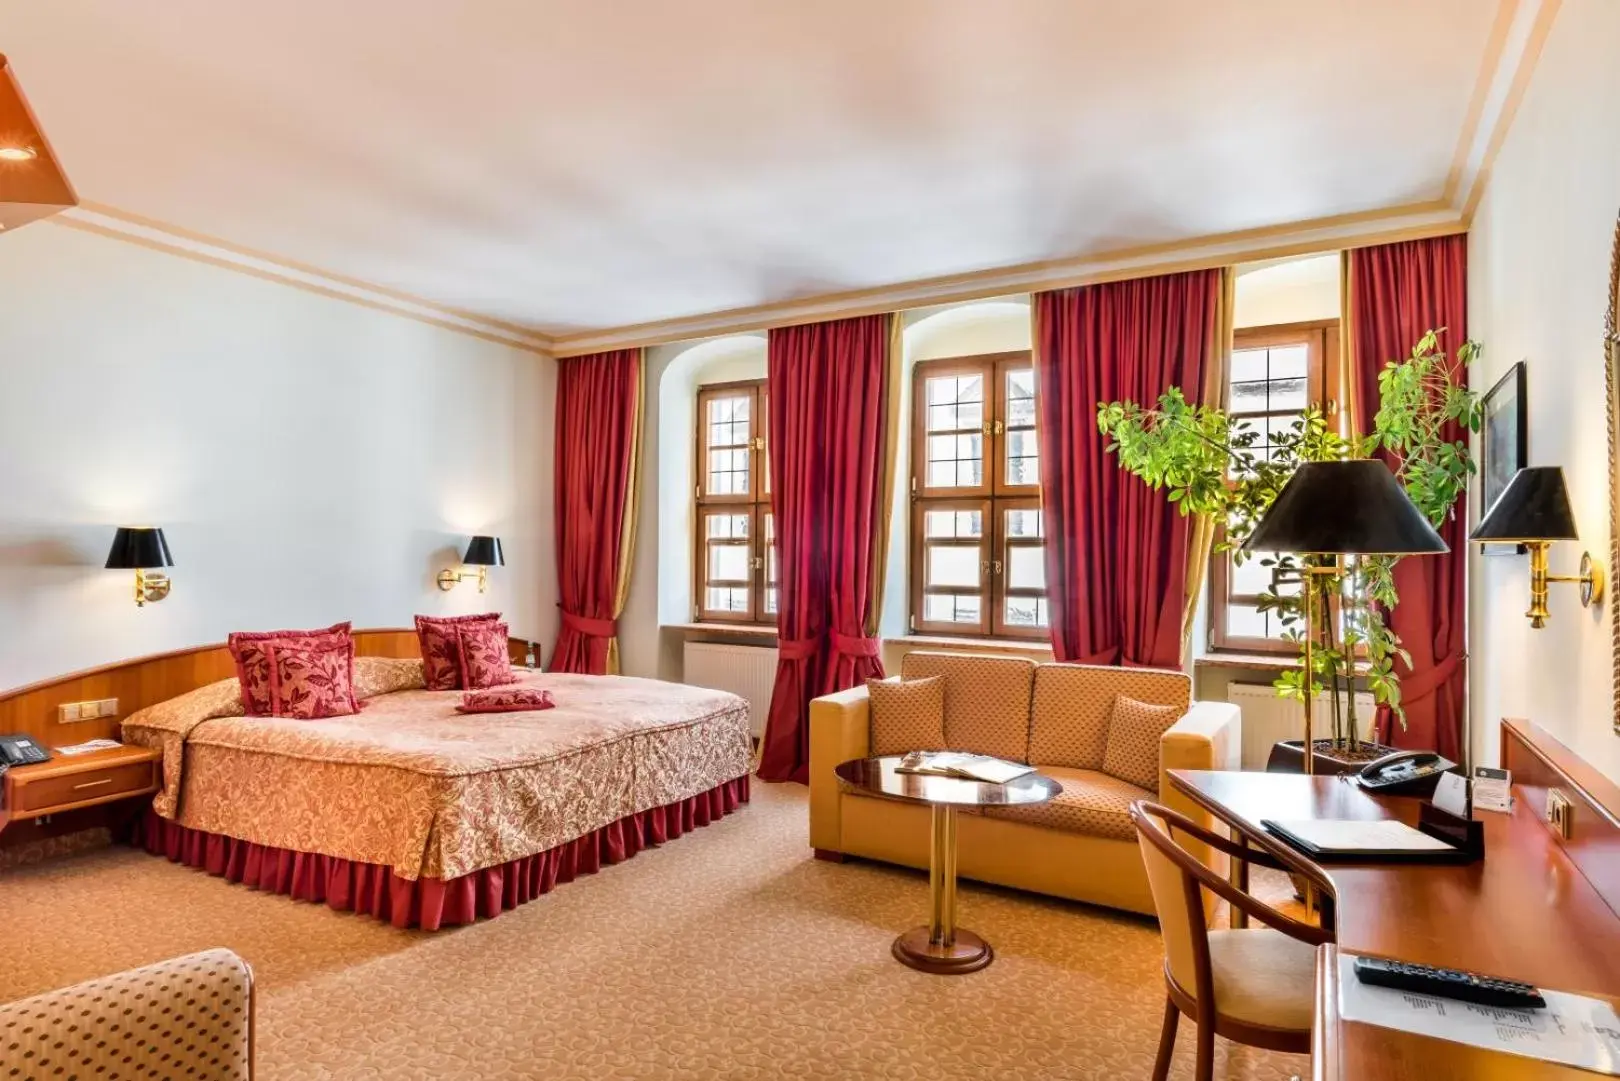 Photo of the whole room in Romantik Hotel Bülow Residenz